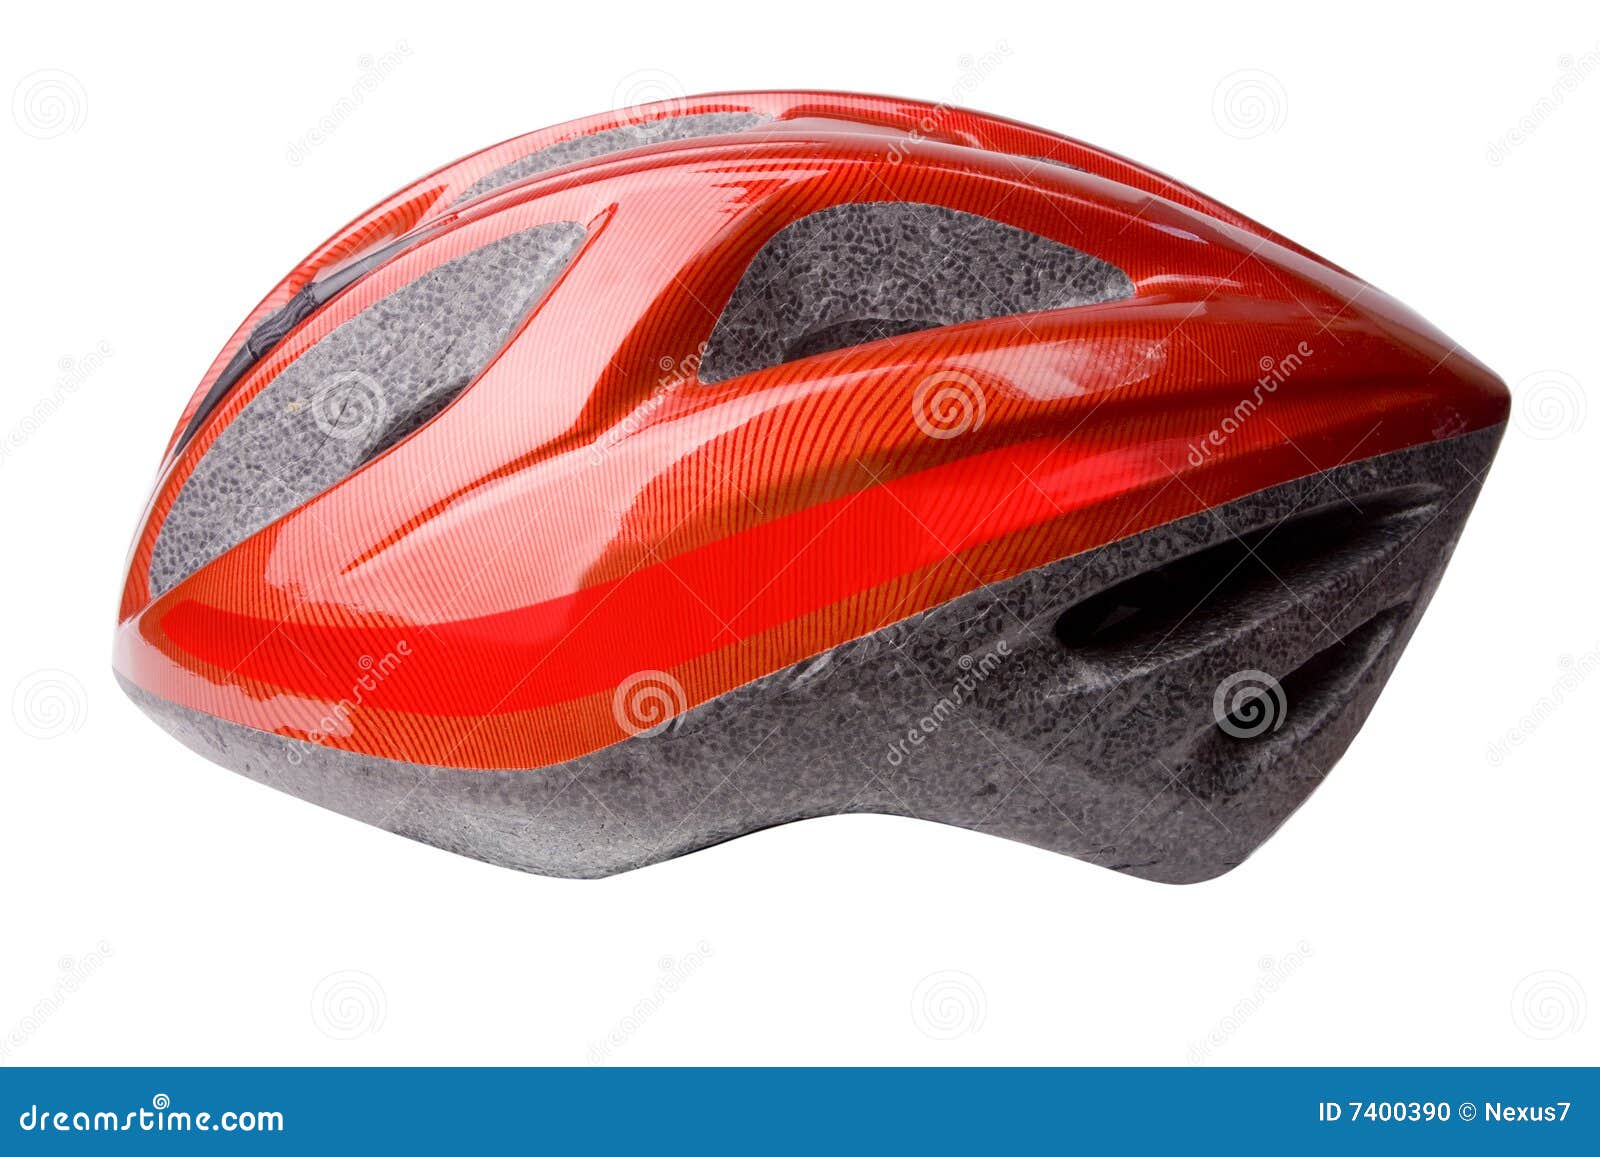 bike helmet clip art - photo #48